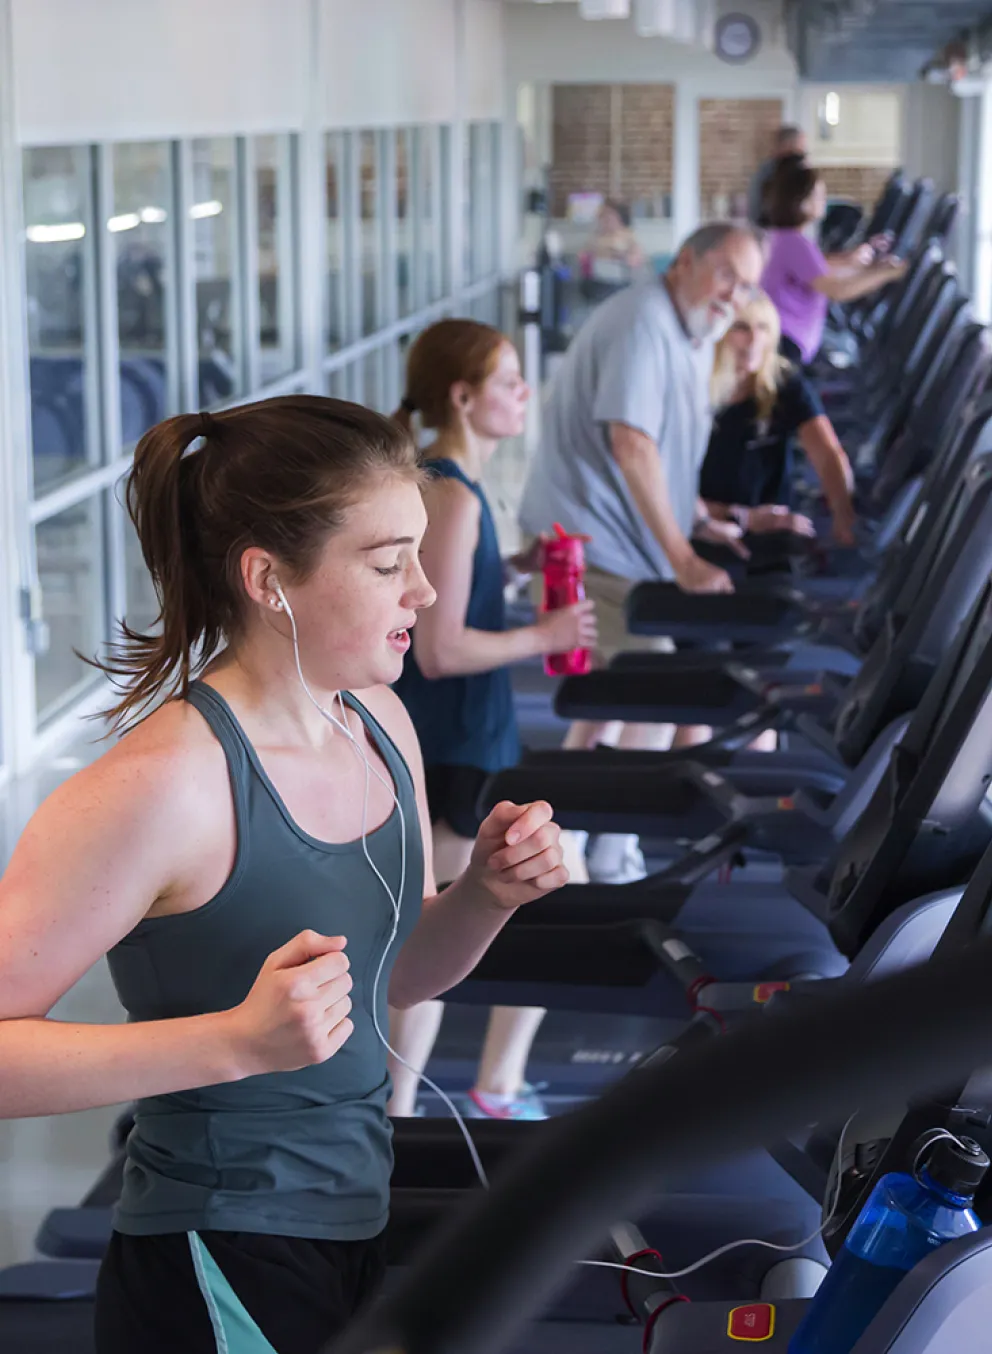 A young woman runs on a treadmill